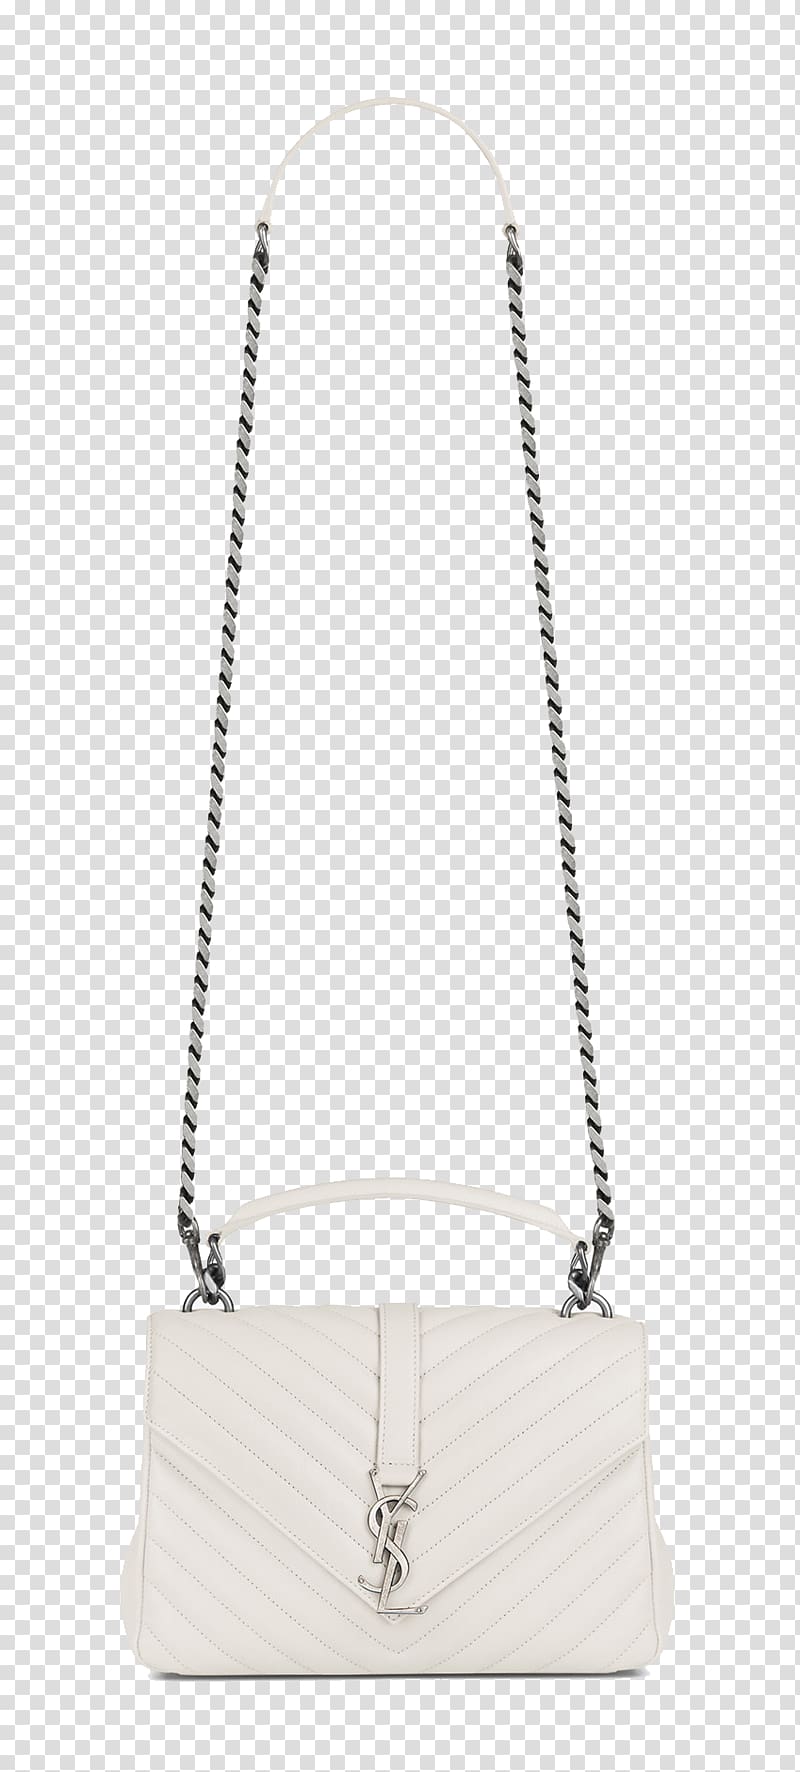 Handbag Yves Saint Laurent Black and white, SaintLaurent chain bag transparent background PNG clipart